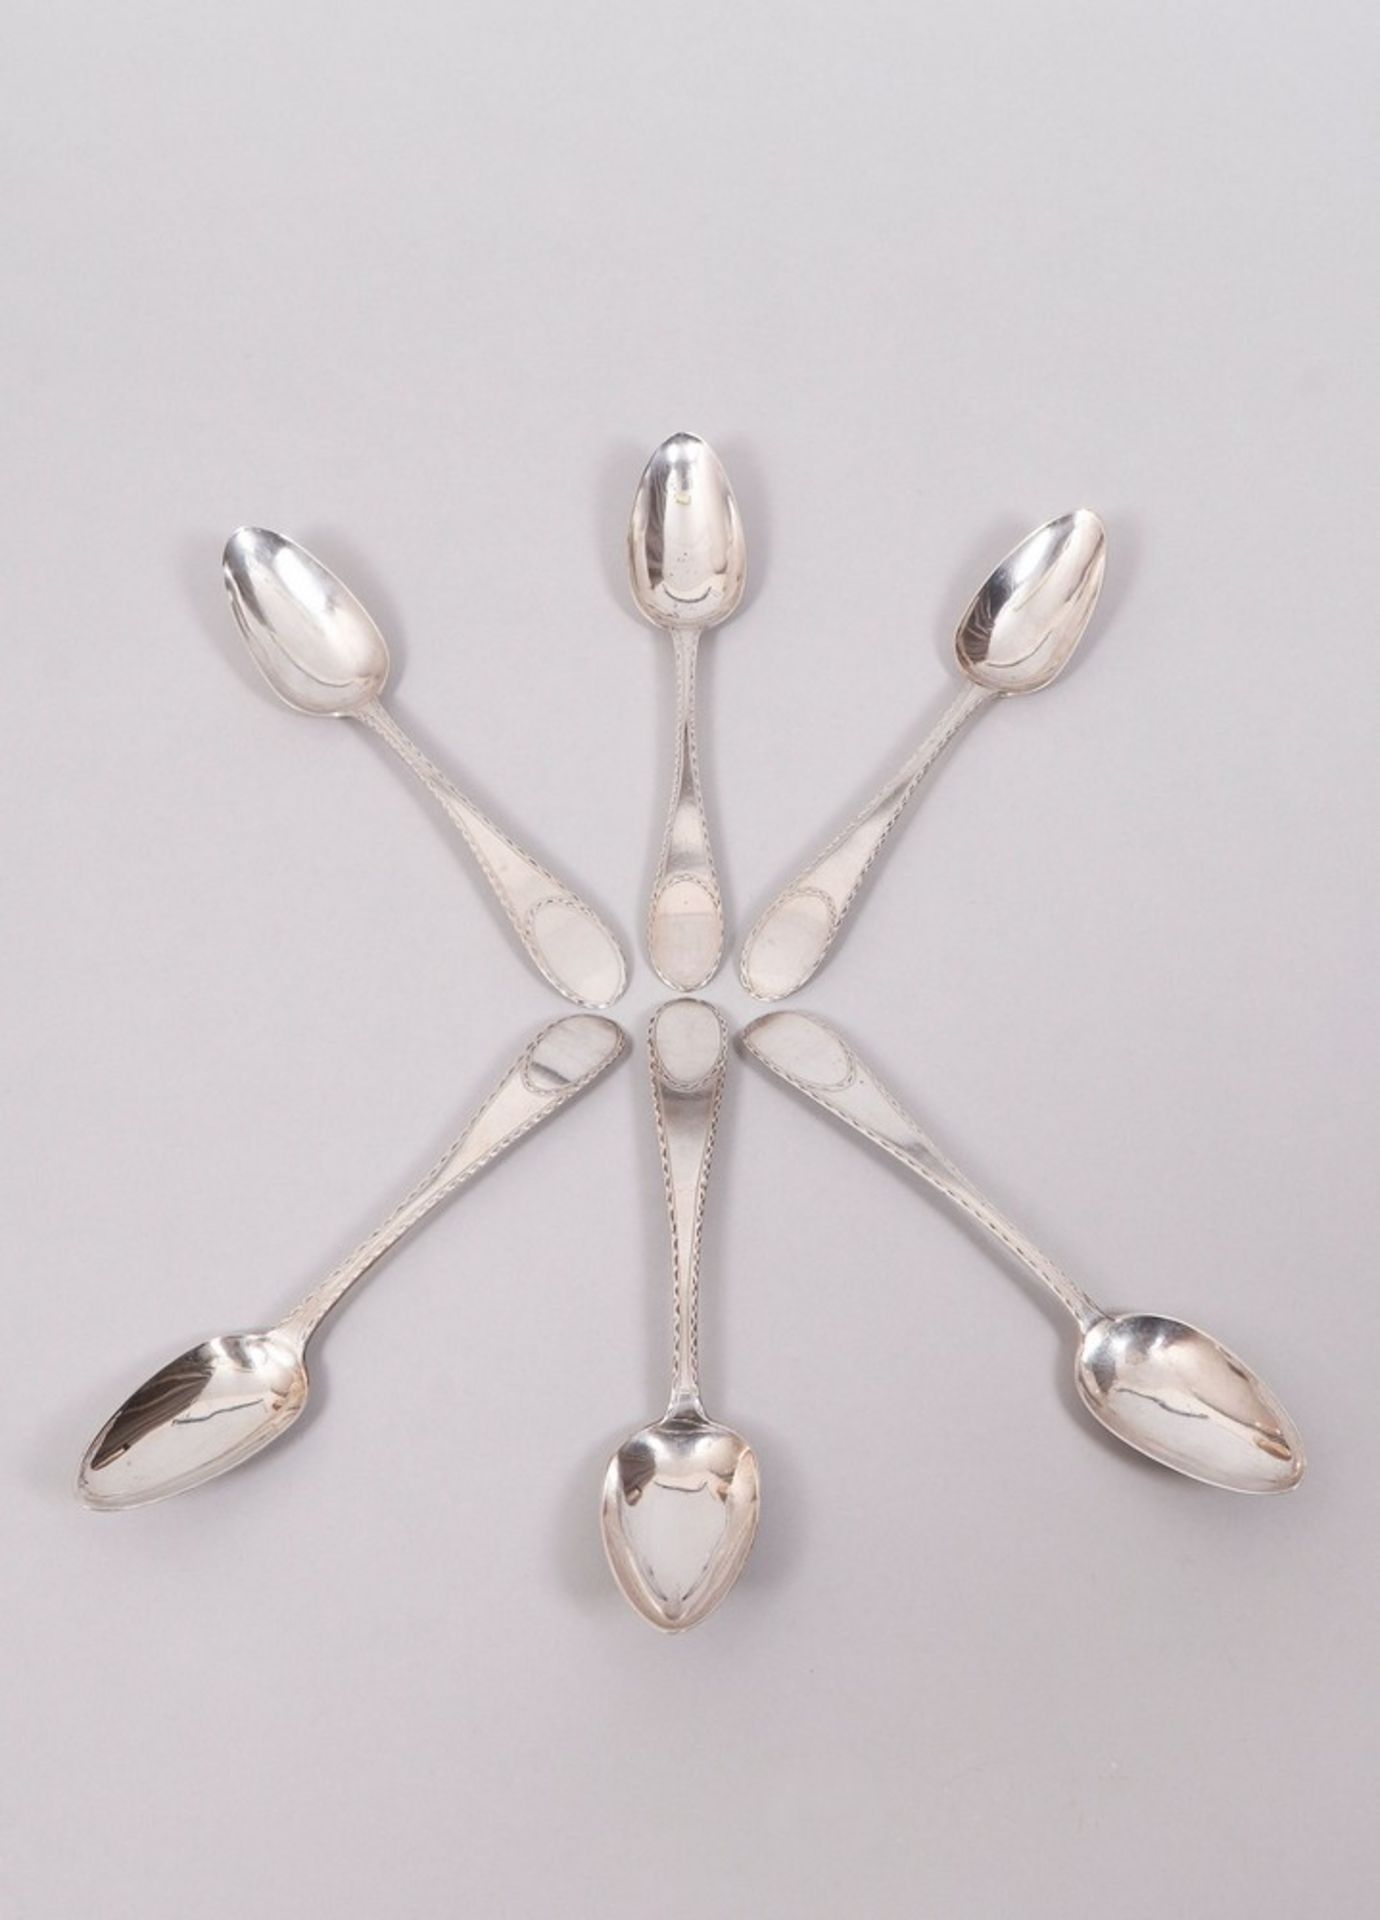 6 dining spoons, silver, German, c. 1800/10